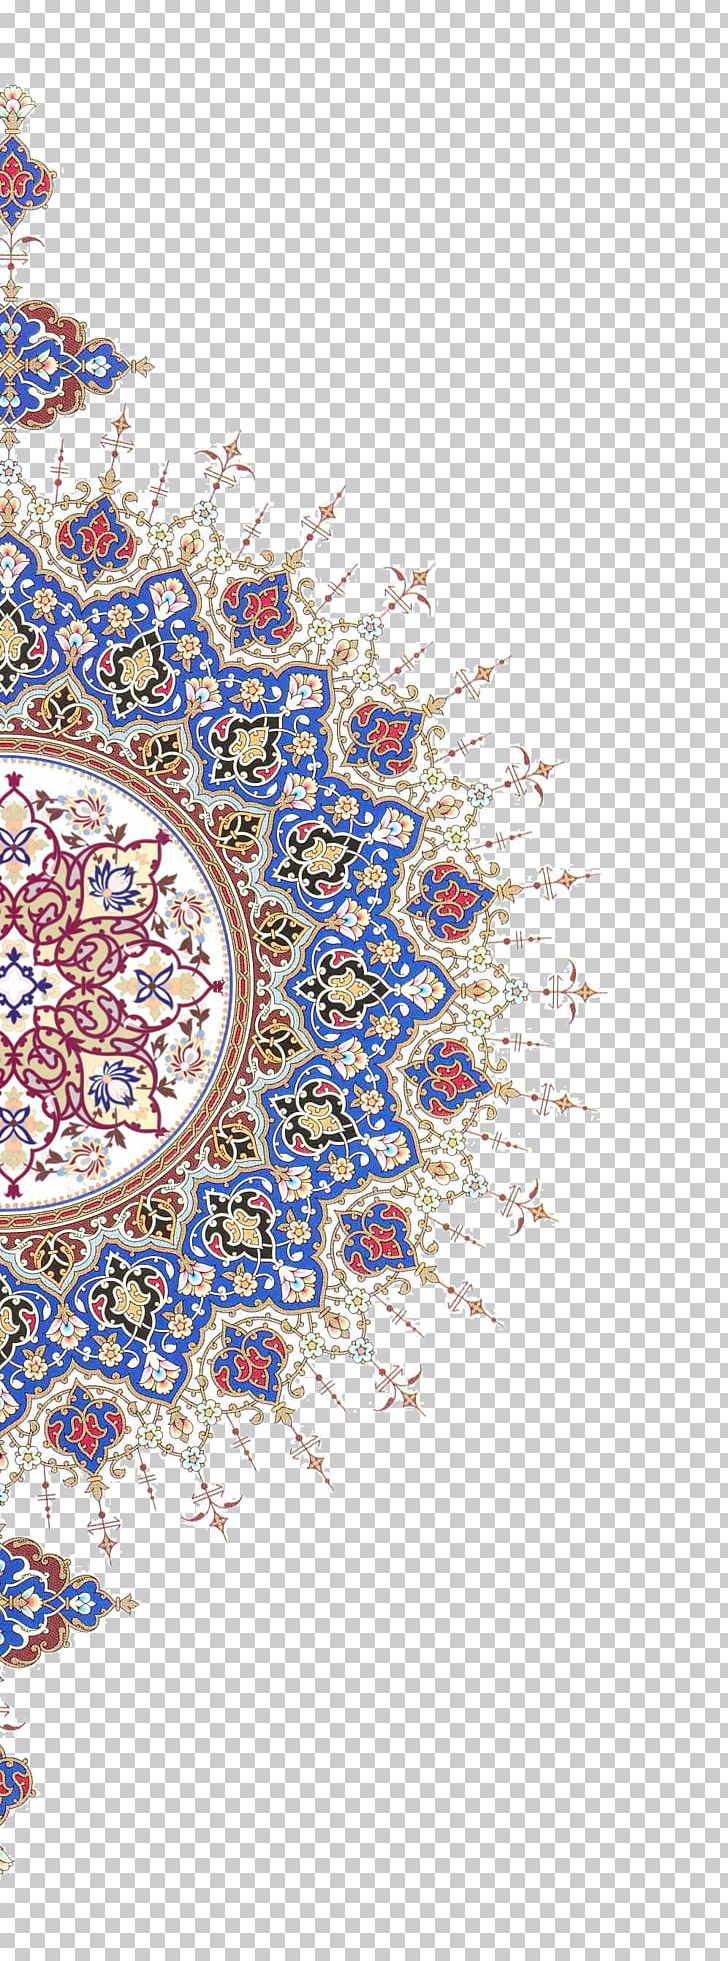 Islamic Art Arabesque Islamic Geometric Patterns PNG, Clipart, Arabesque, Arabic Calligraphy, Art, Blue, Design Free PNG Download